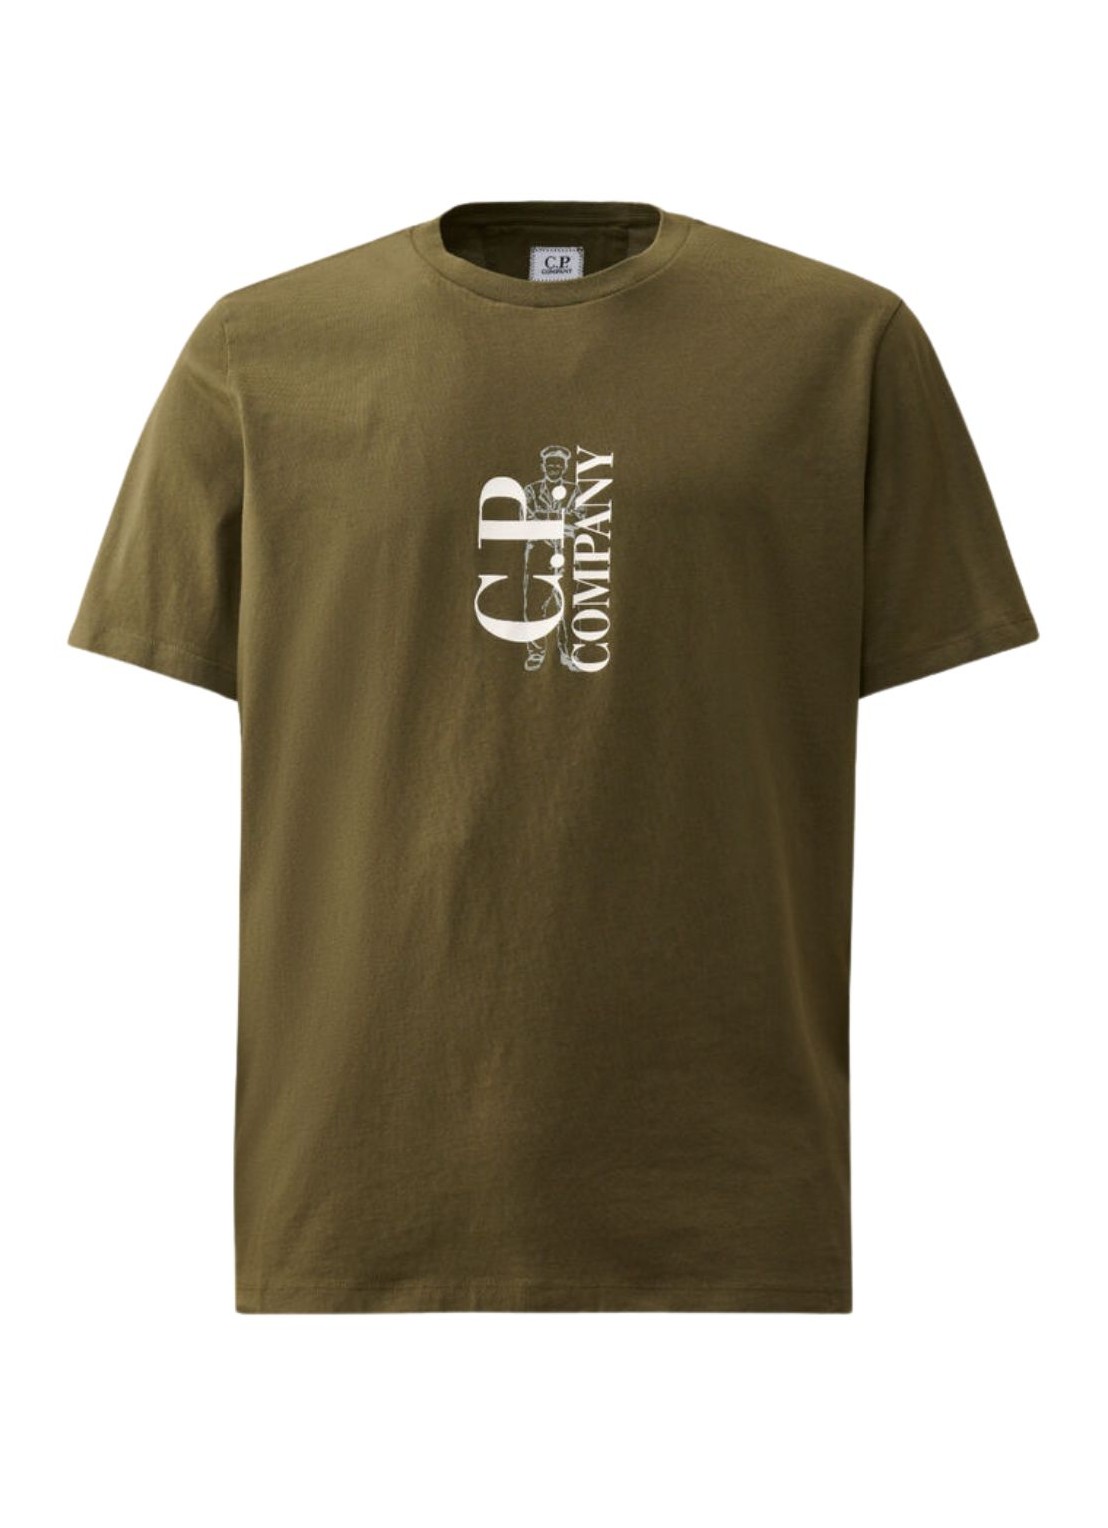 Camiseta c.p.company t-shirt man 30/1 jersey british sailor t-shirt 16cmts139a005100w 683 talla L
 